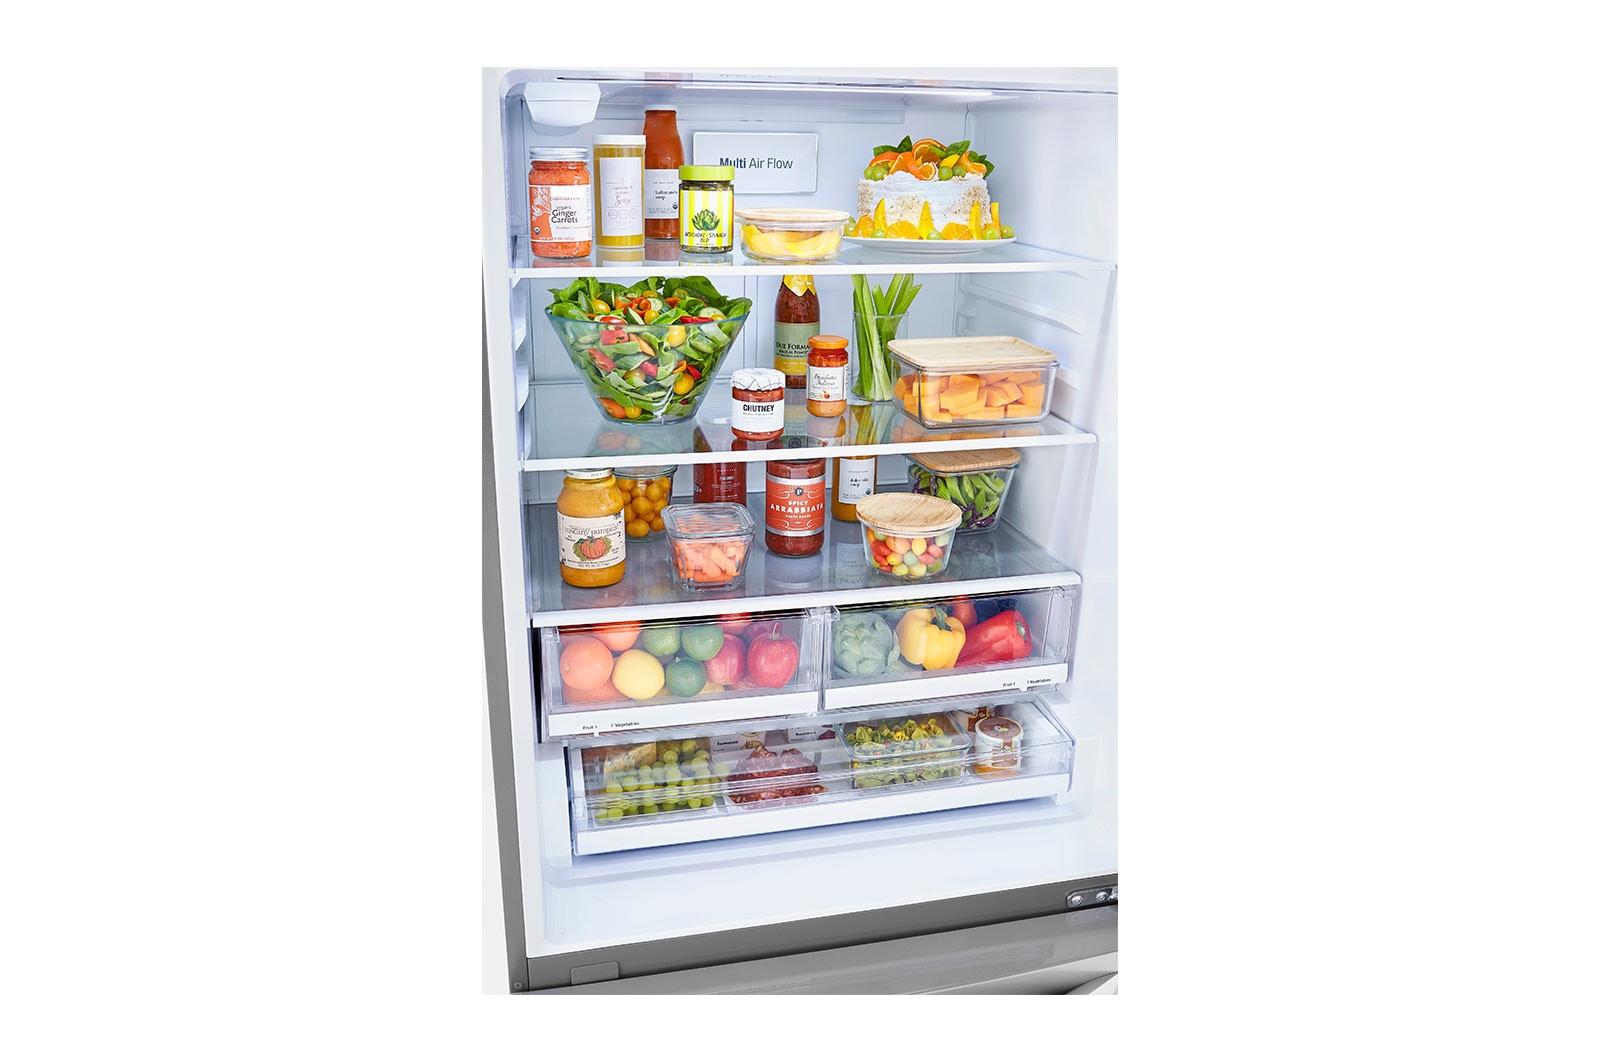 Lg 26 cu. ft. Bottom Freezer Refrigerator